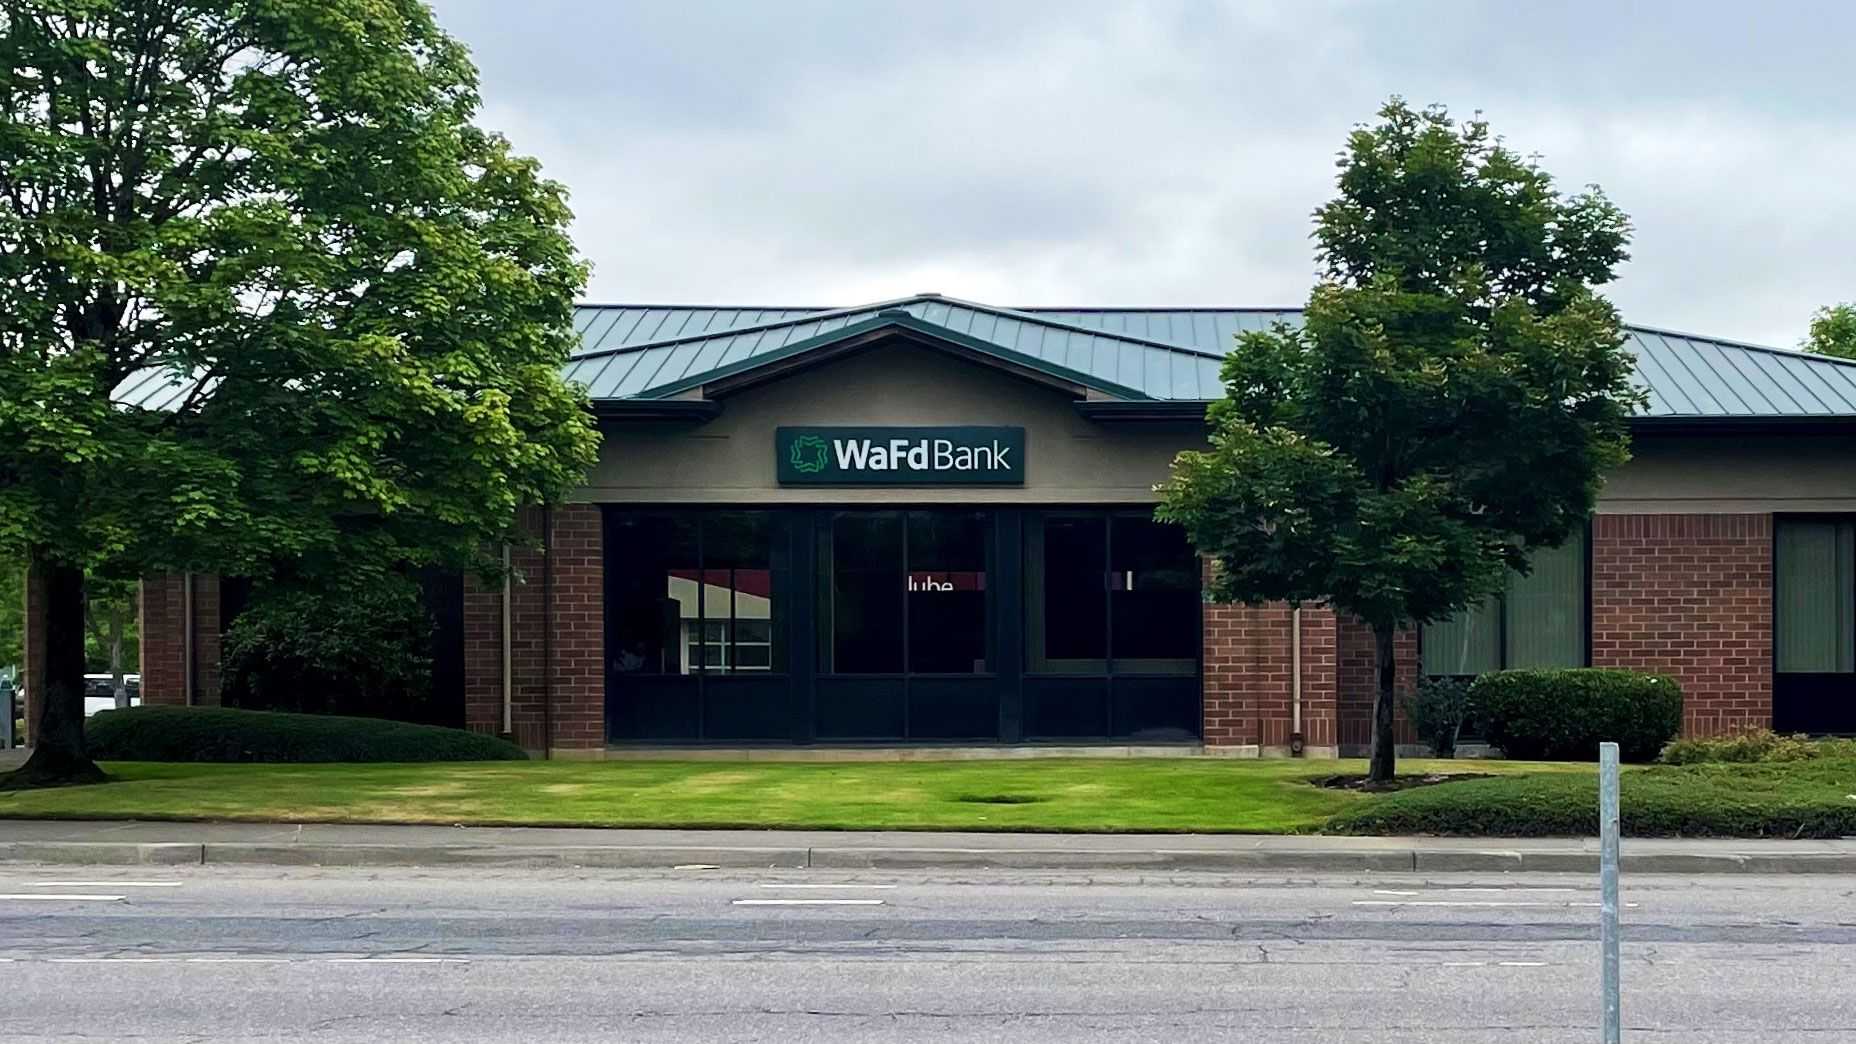 WaFd Bank in Tigard, Oregon #1118 - Washington Federal.